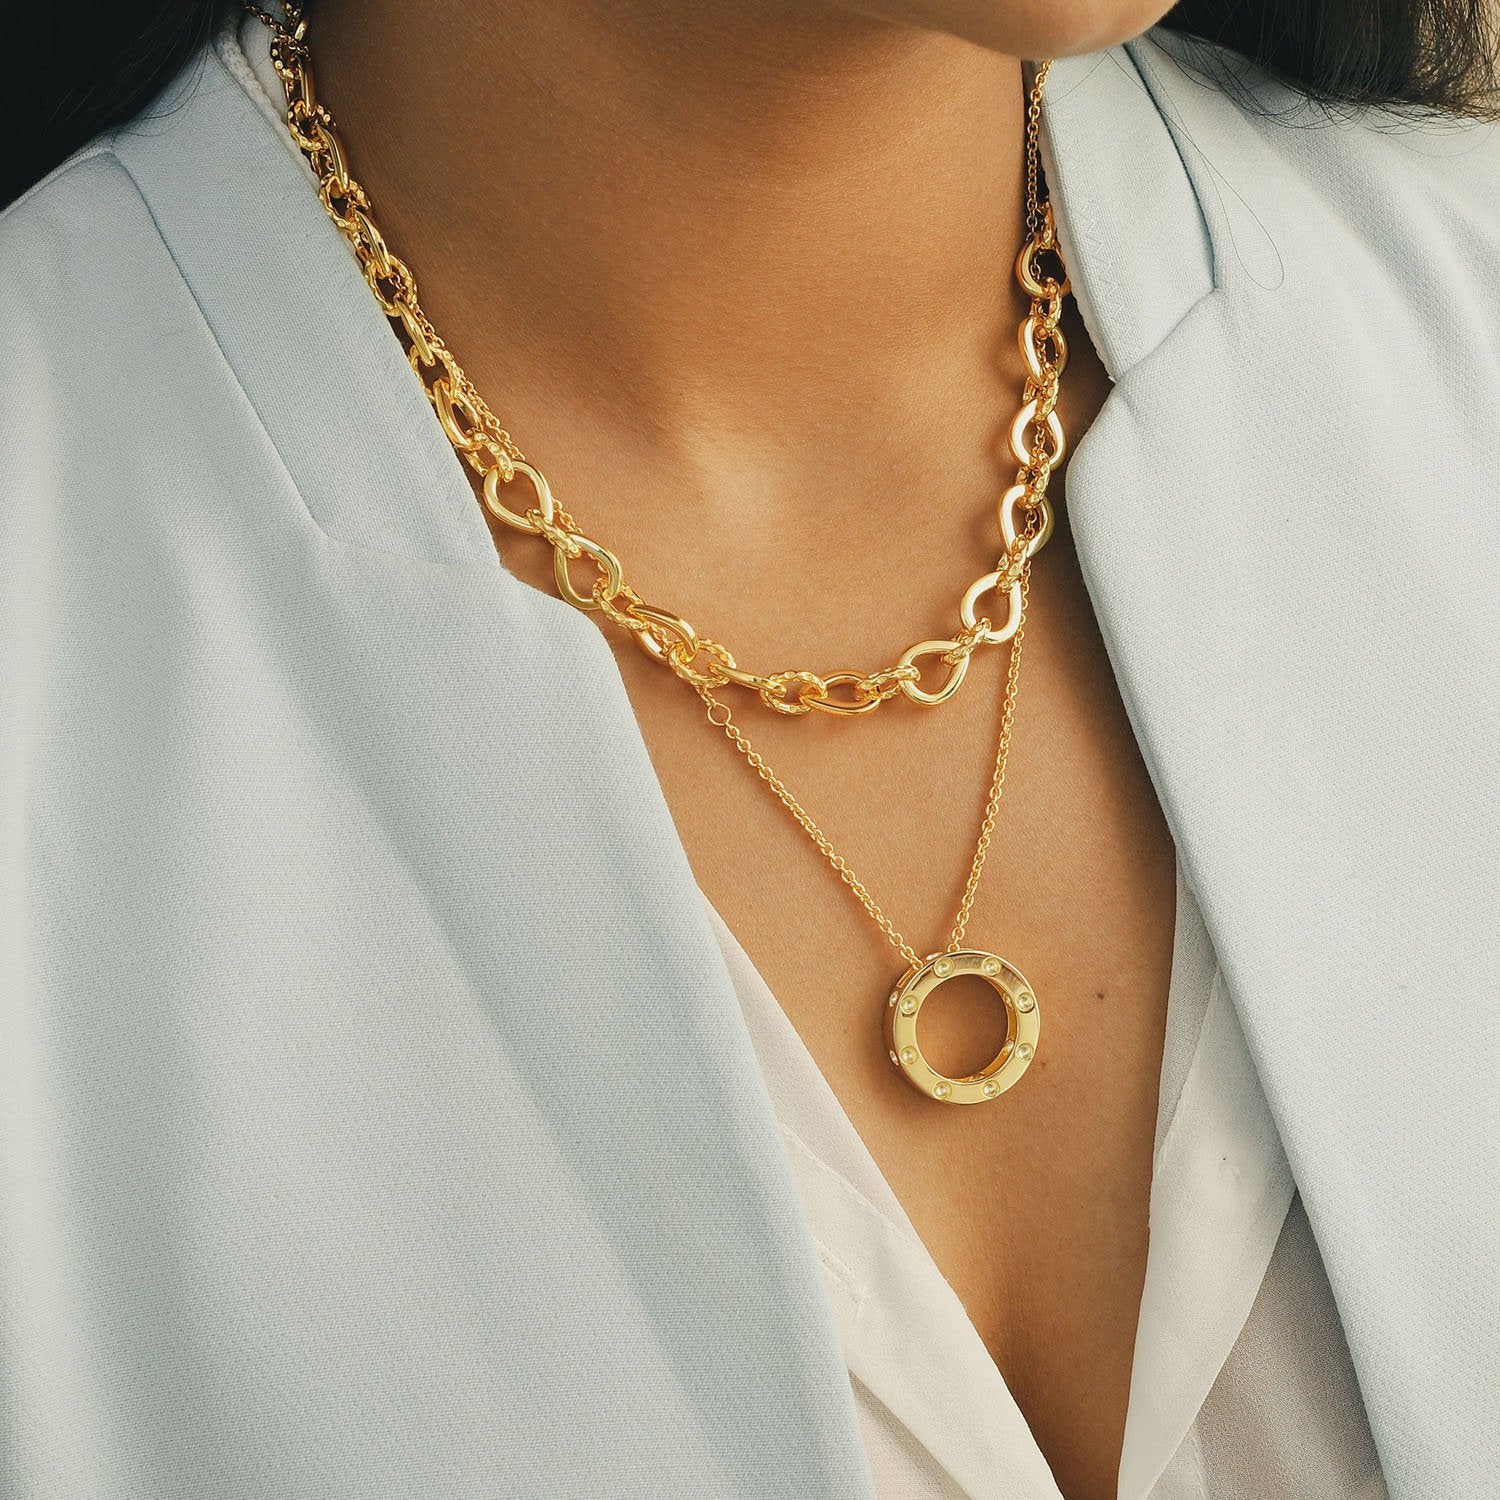 Rachel Galley Necklace With Round Pendant | eBay